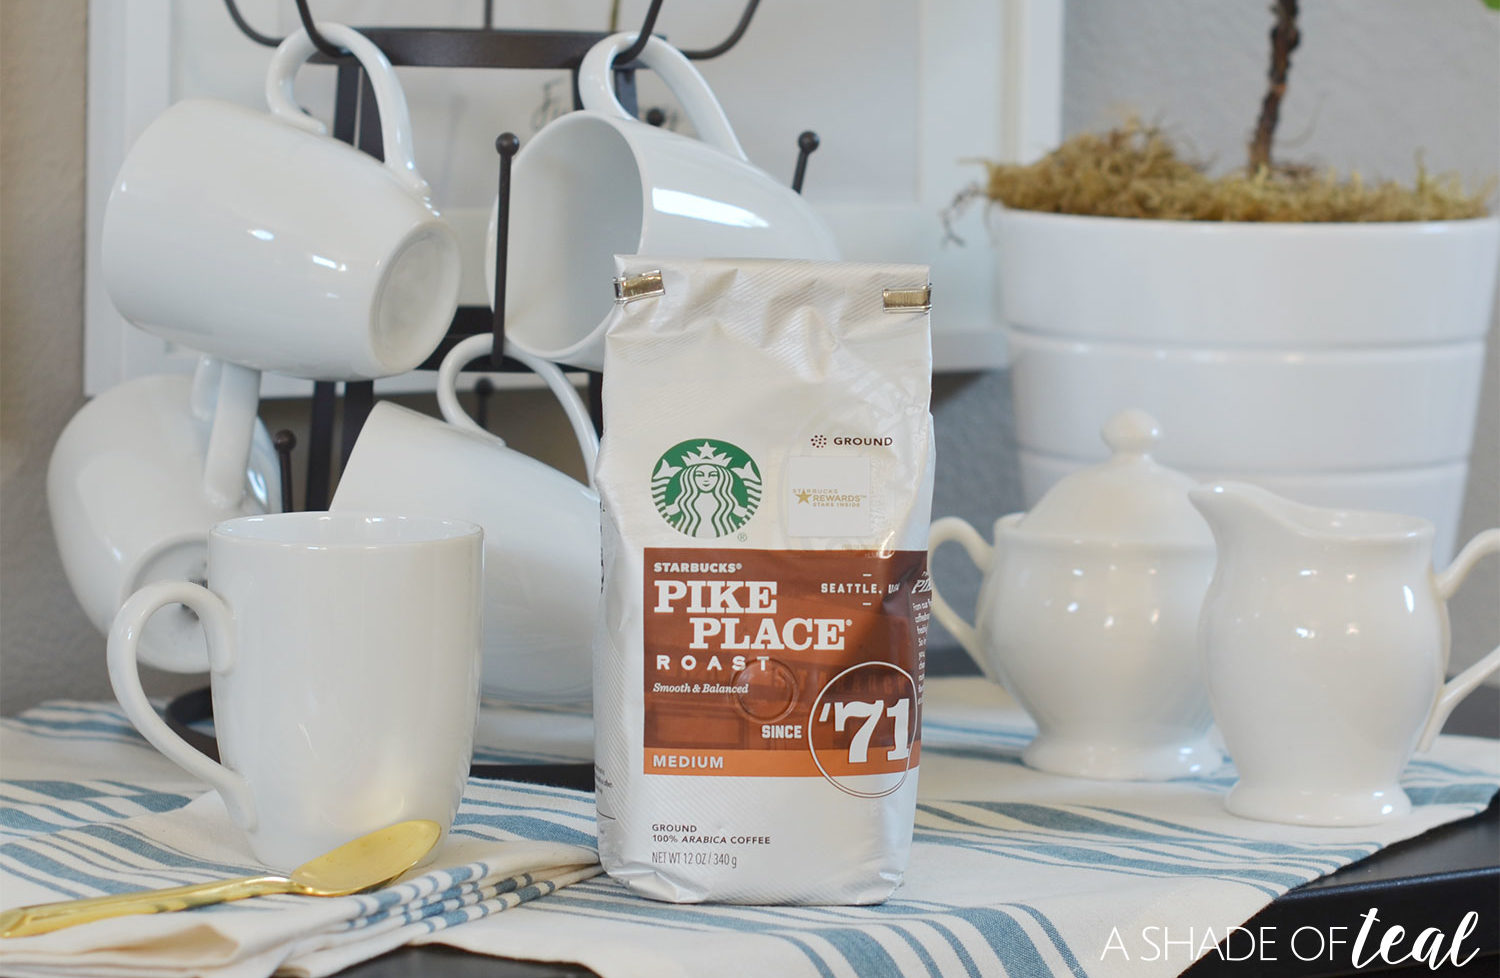 Bag of Starbucks brand ground coffee with coffee cups